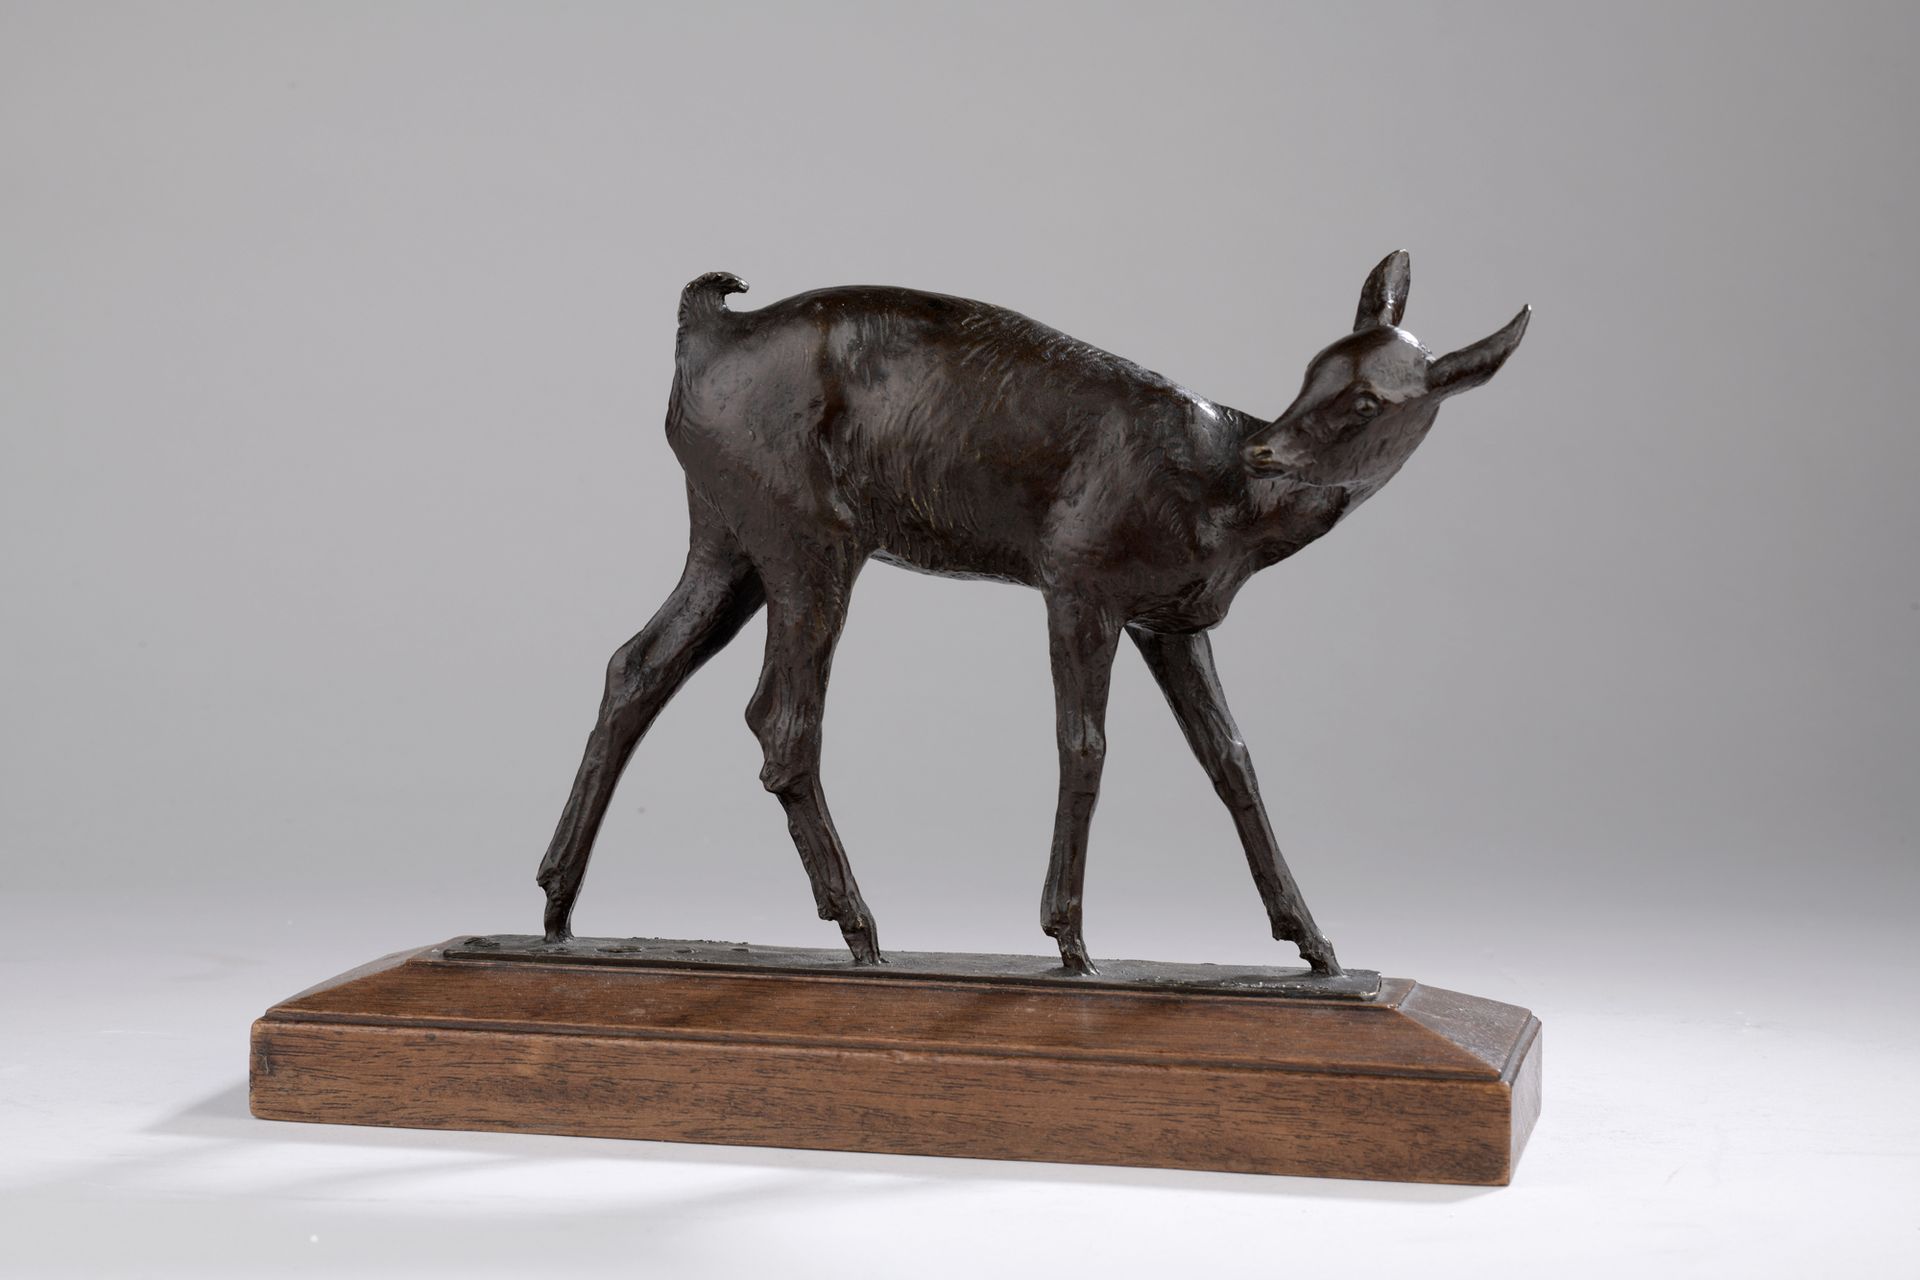 Null 阿利-比特 (1883-1973)

无名氏

约1930年

带有棕色铜锈的青铜器

签名为 "Ary Bitter "的露台上。

印有创始人的标&hellip;